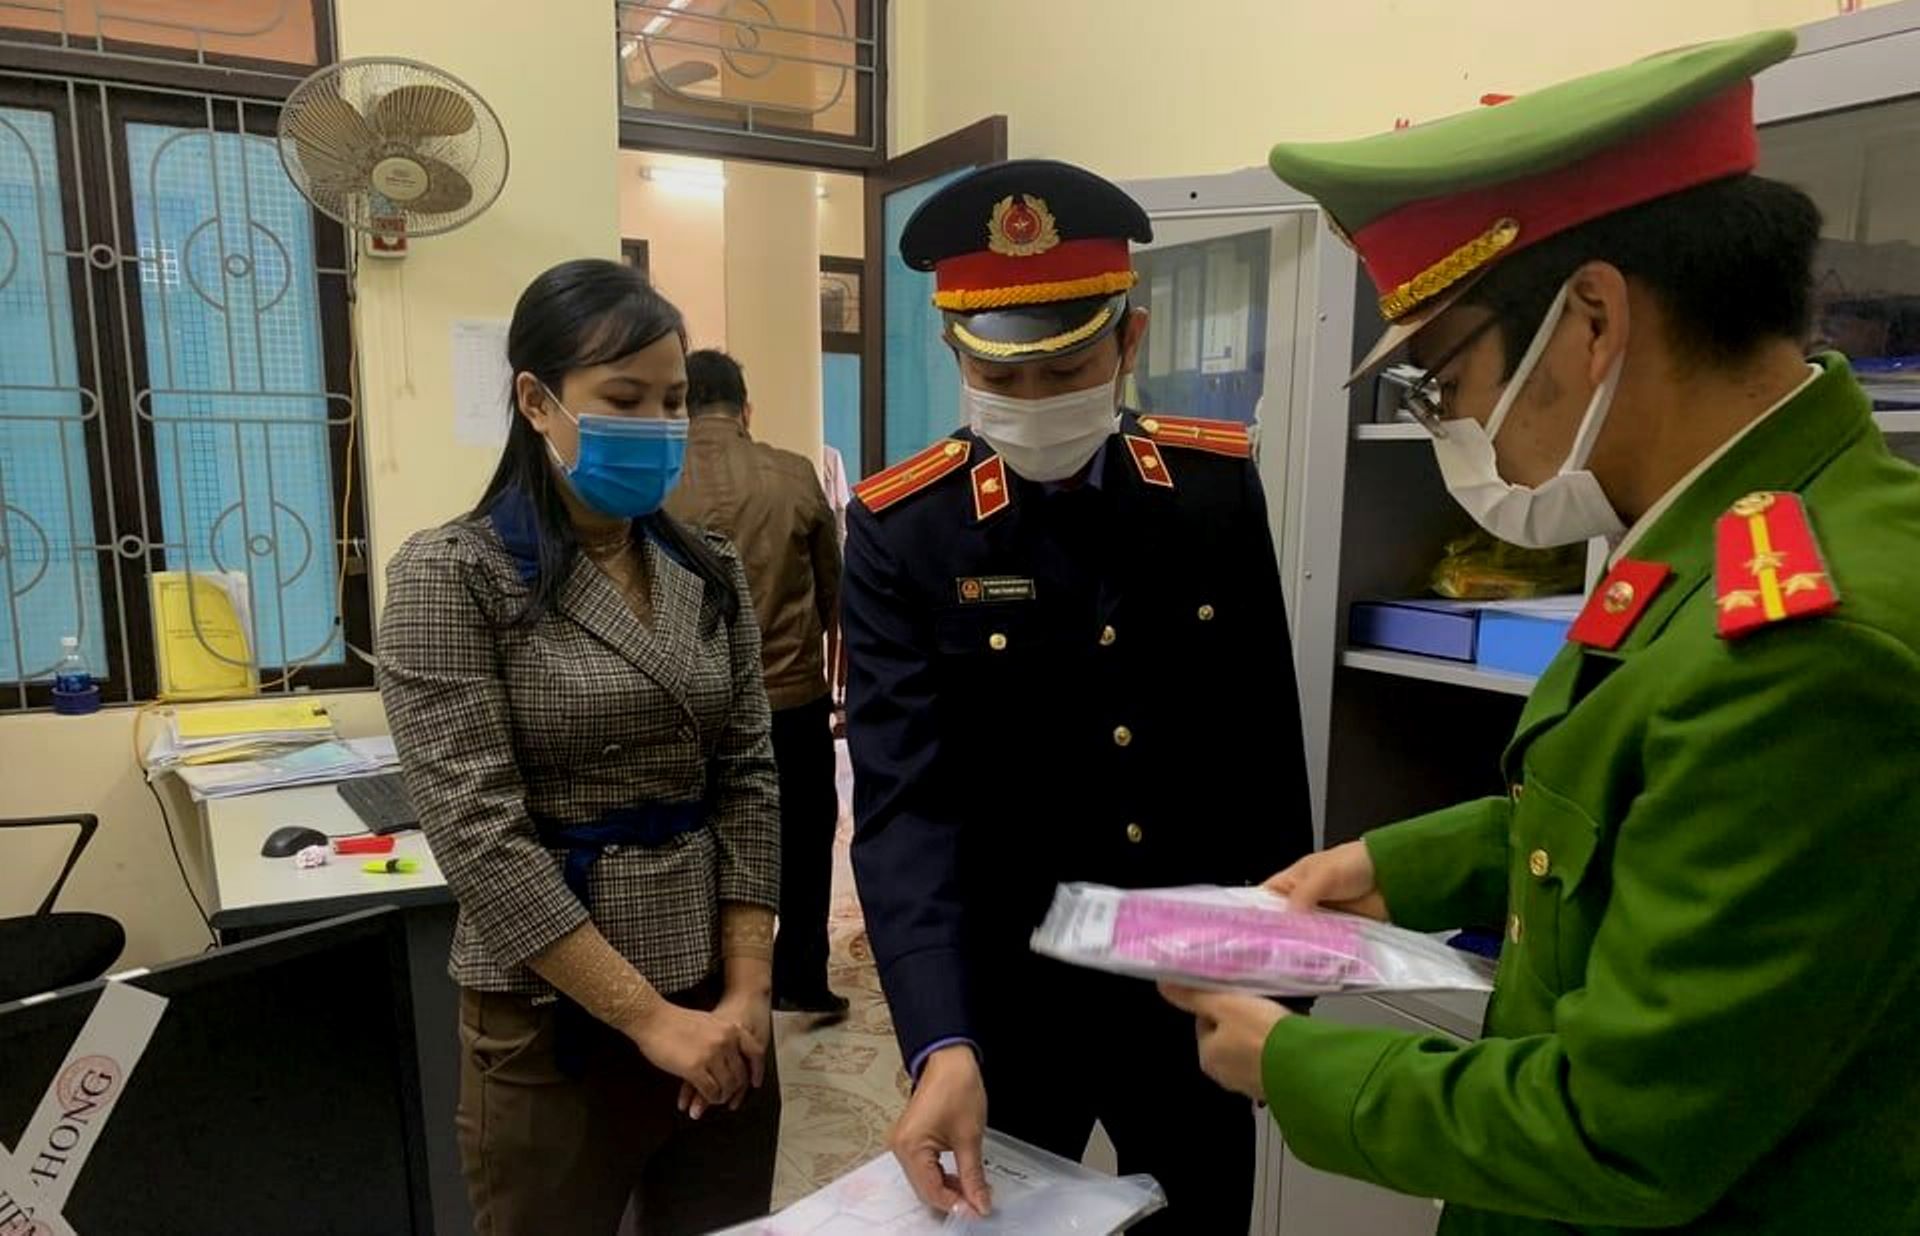 In Vietnam, education center treasurer arrested on suspicion of $281,000 embezzlement